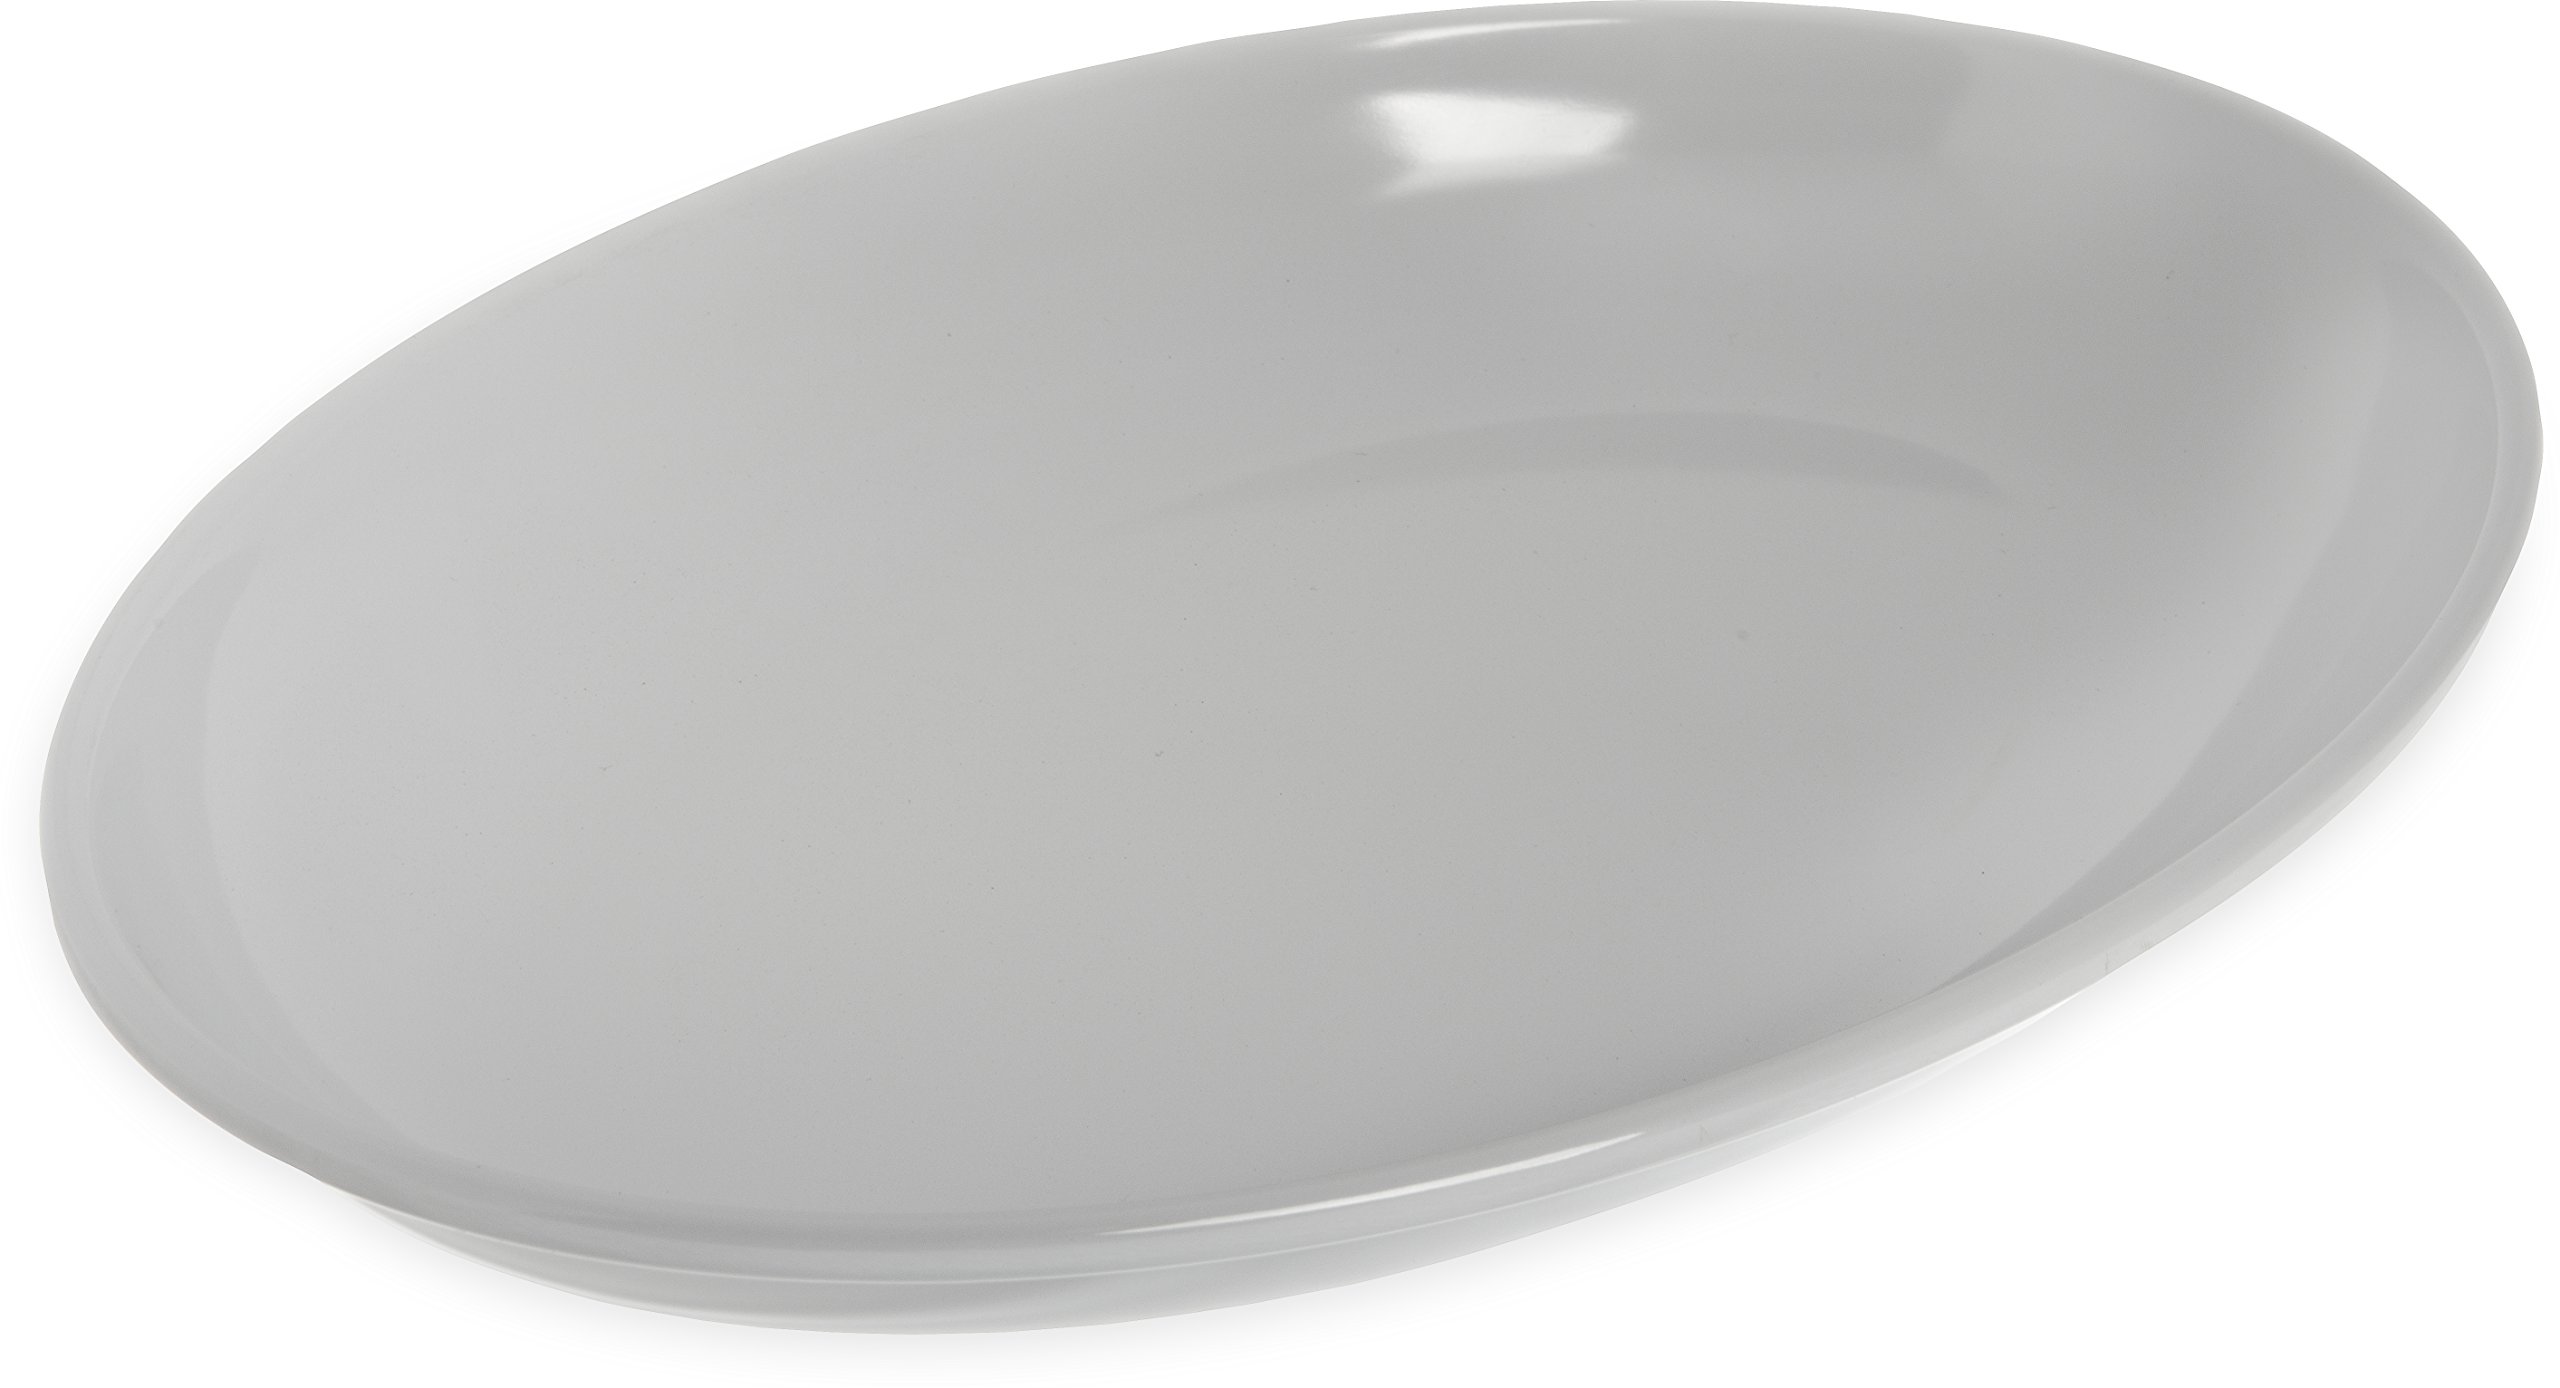 Carlisle Designer Displayware™ Oval Platter